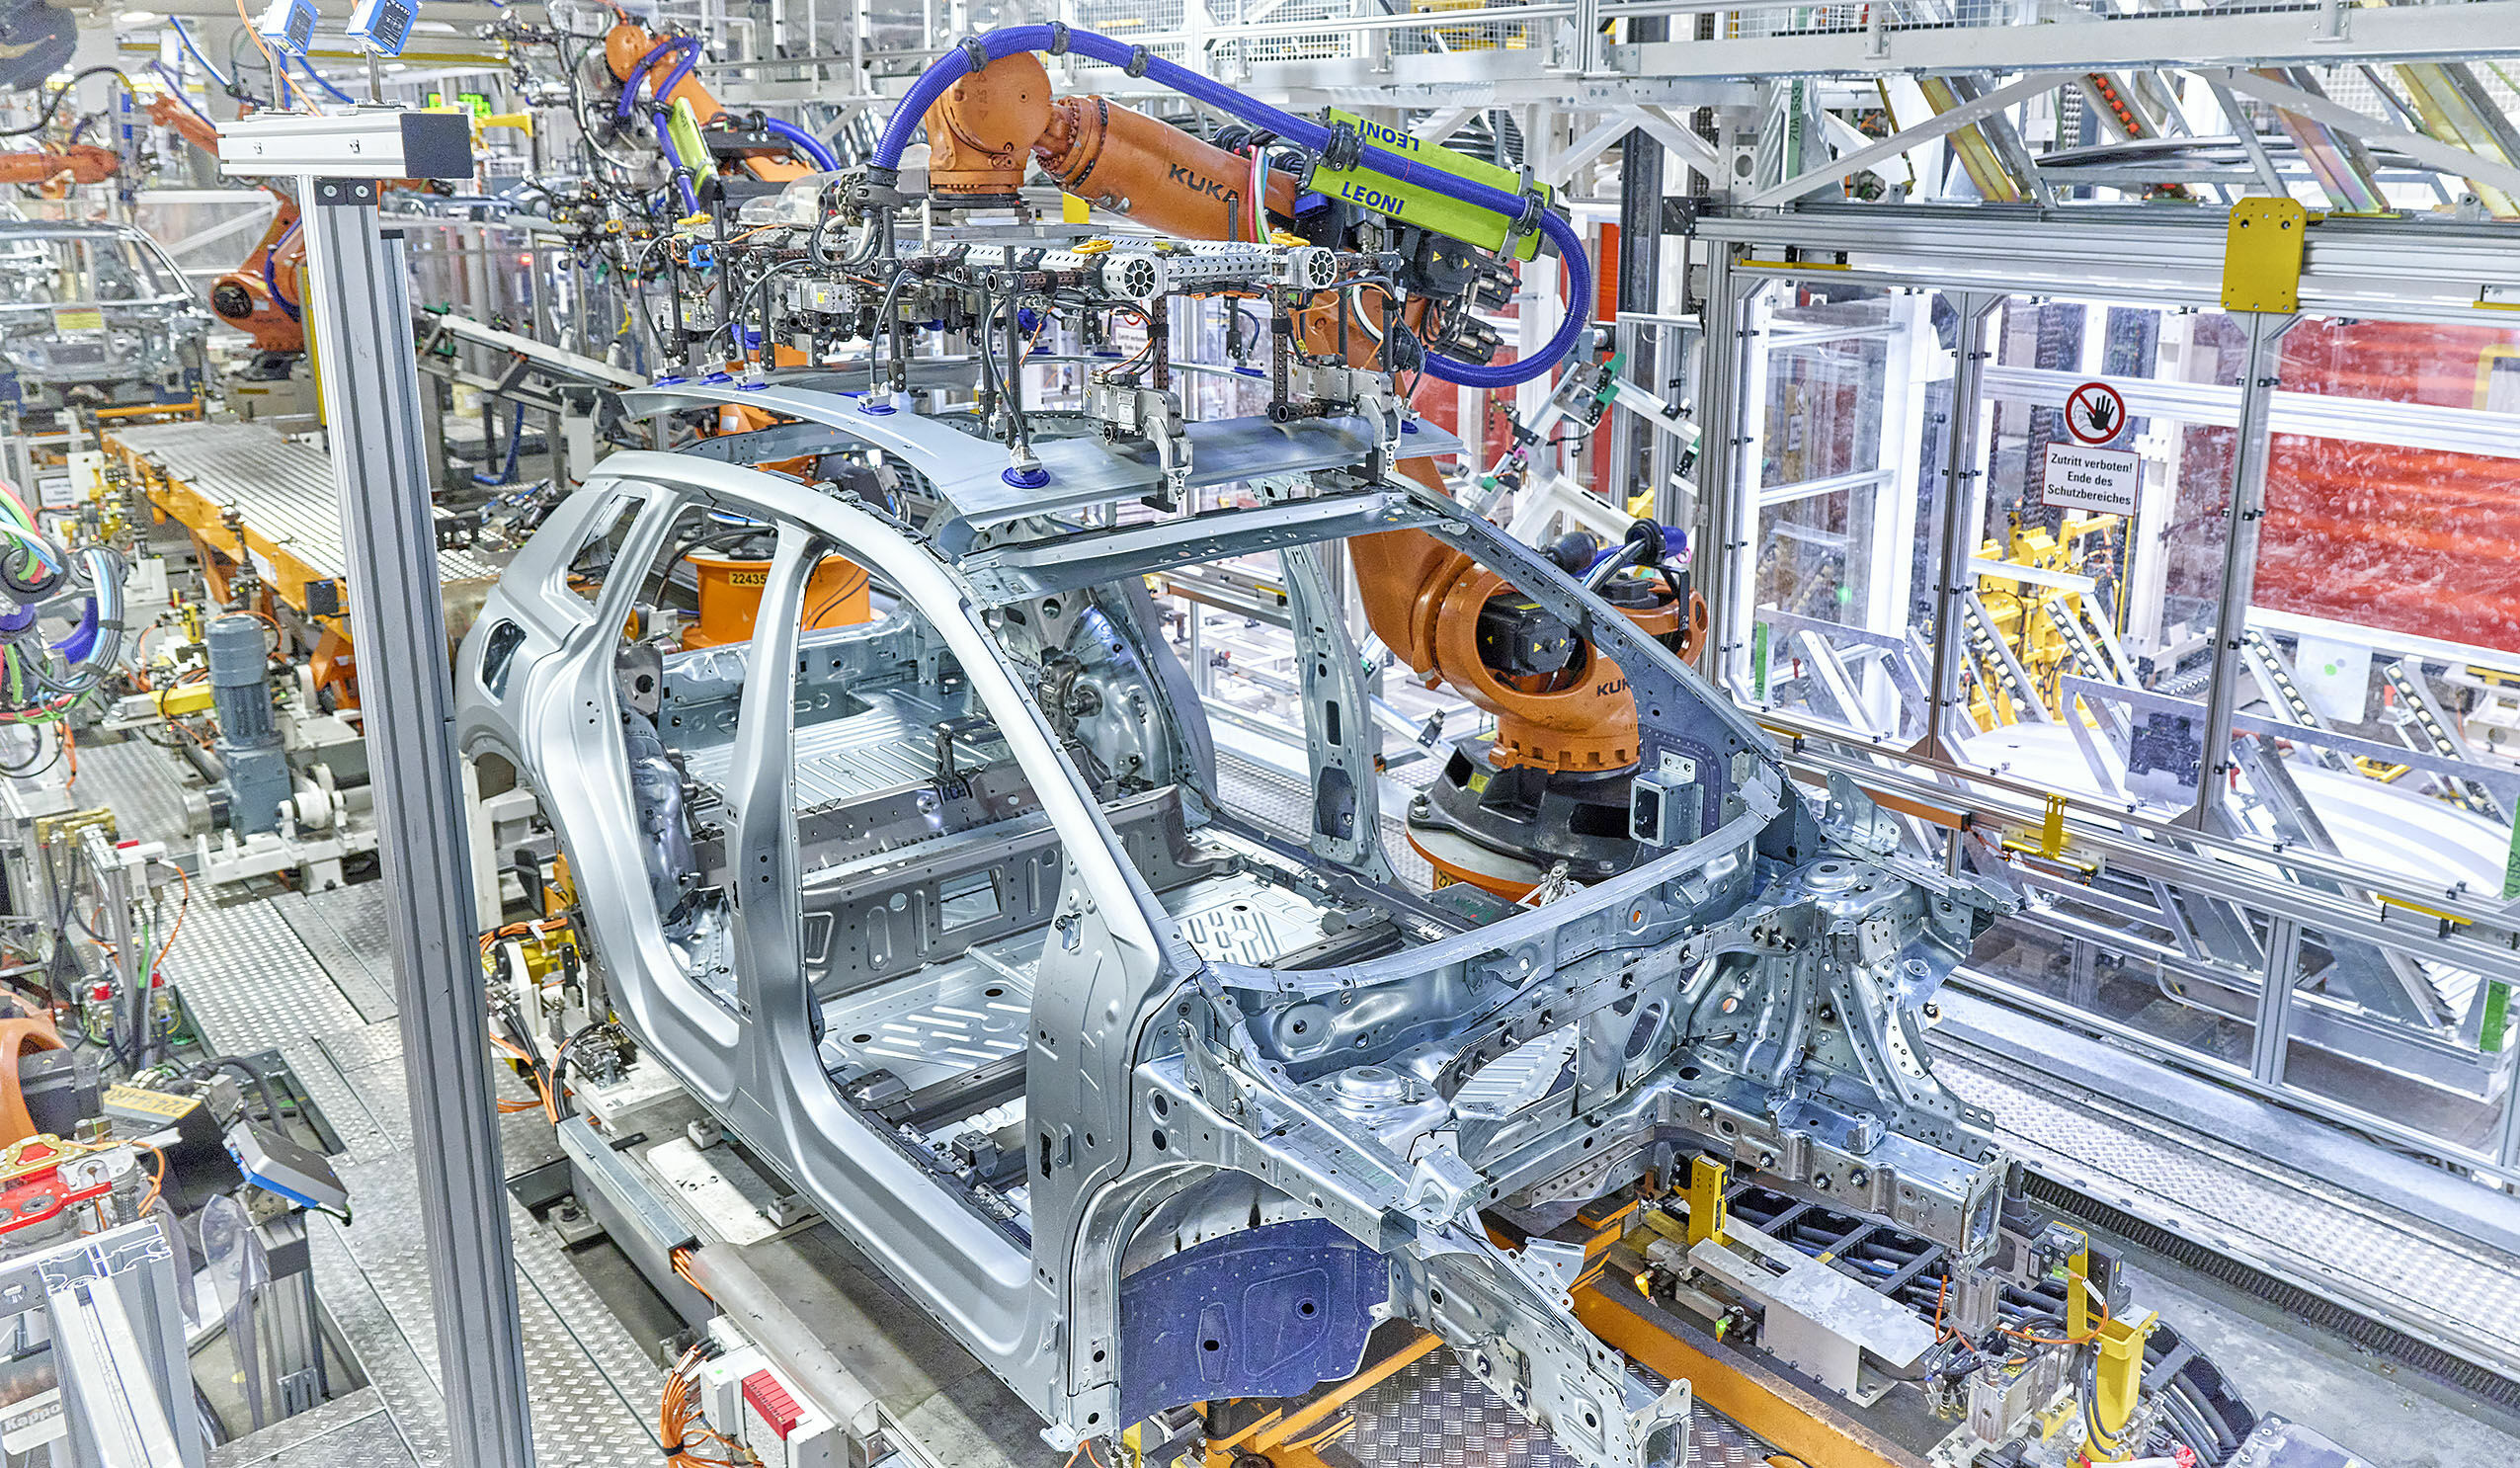 Start of production for Audi Q4 e-tron